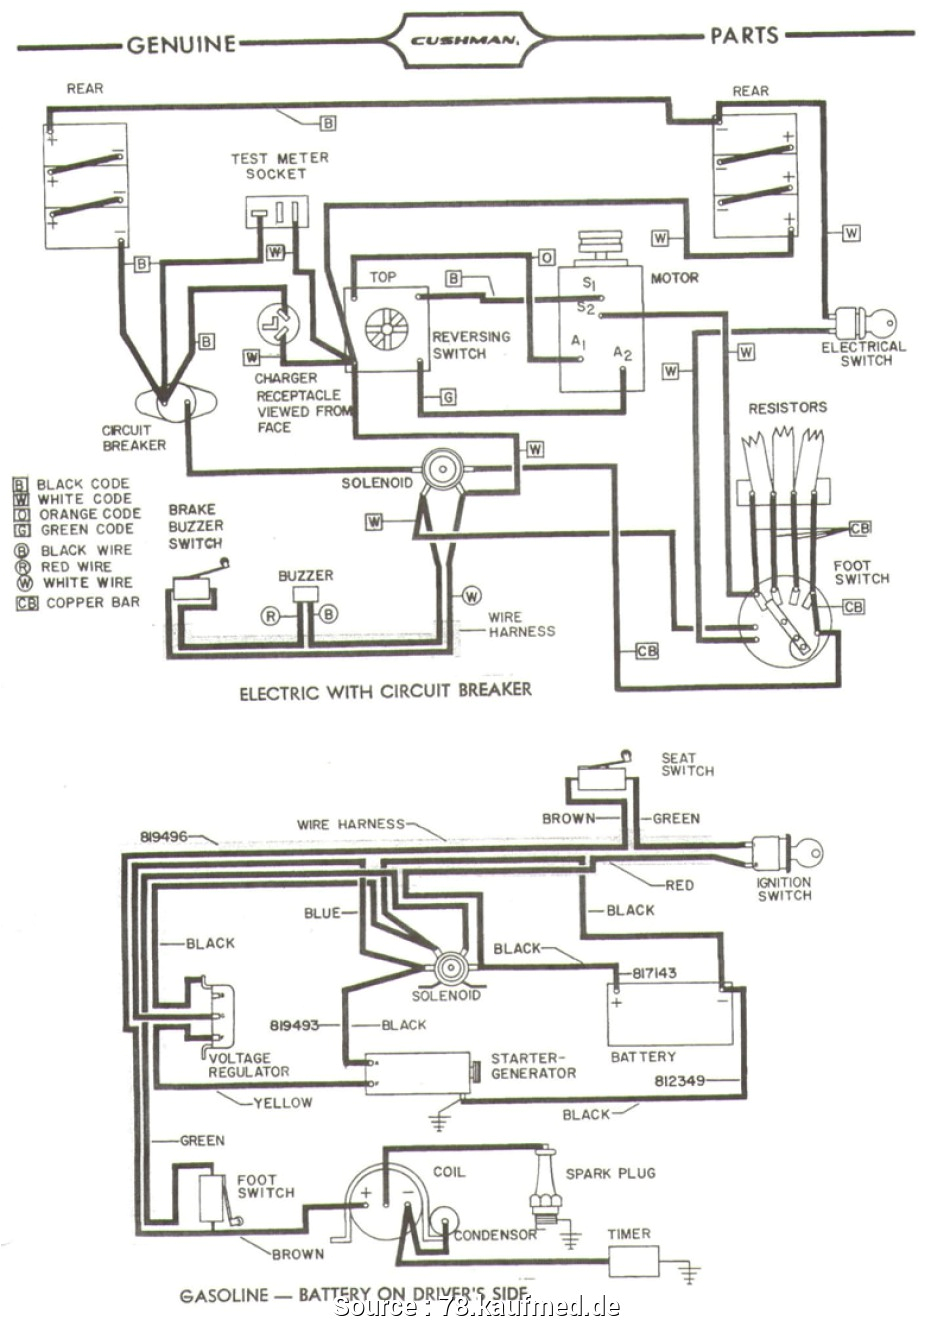 cushman wiring schematics wiring diagram blog 48 volt cushman wiring diagram schema diagram database cushman wiring